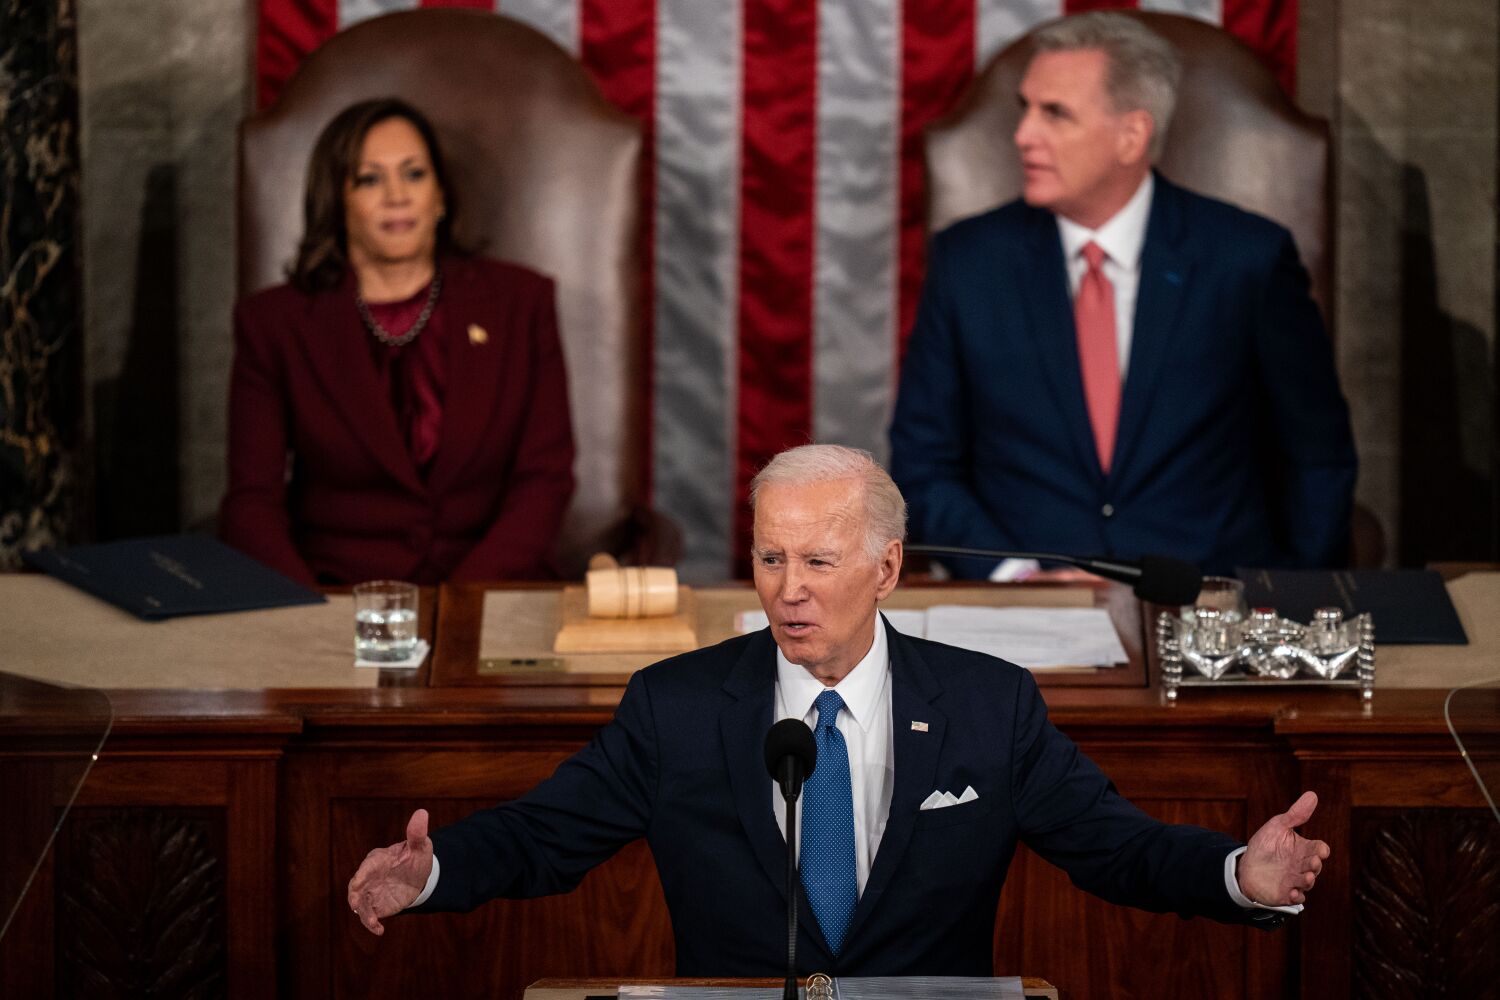 Column: Biden's 2024 presidential campaign harks back to past Democratic triumphs